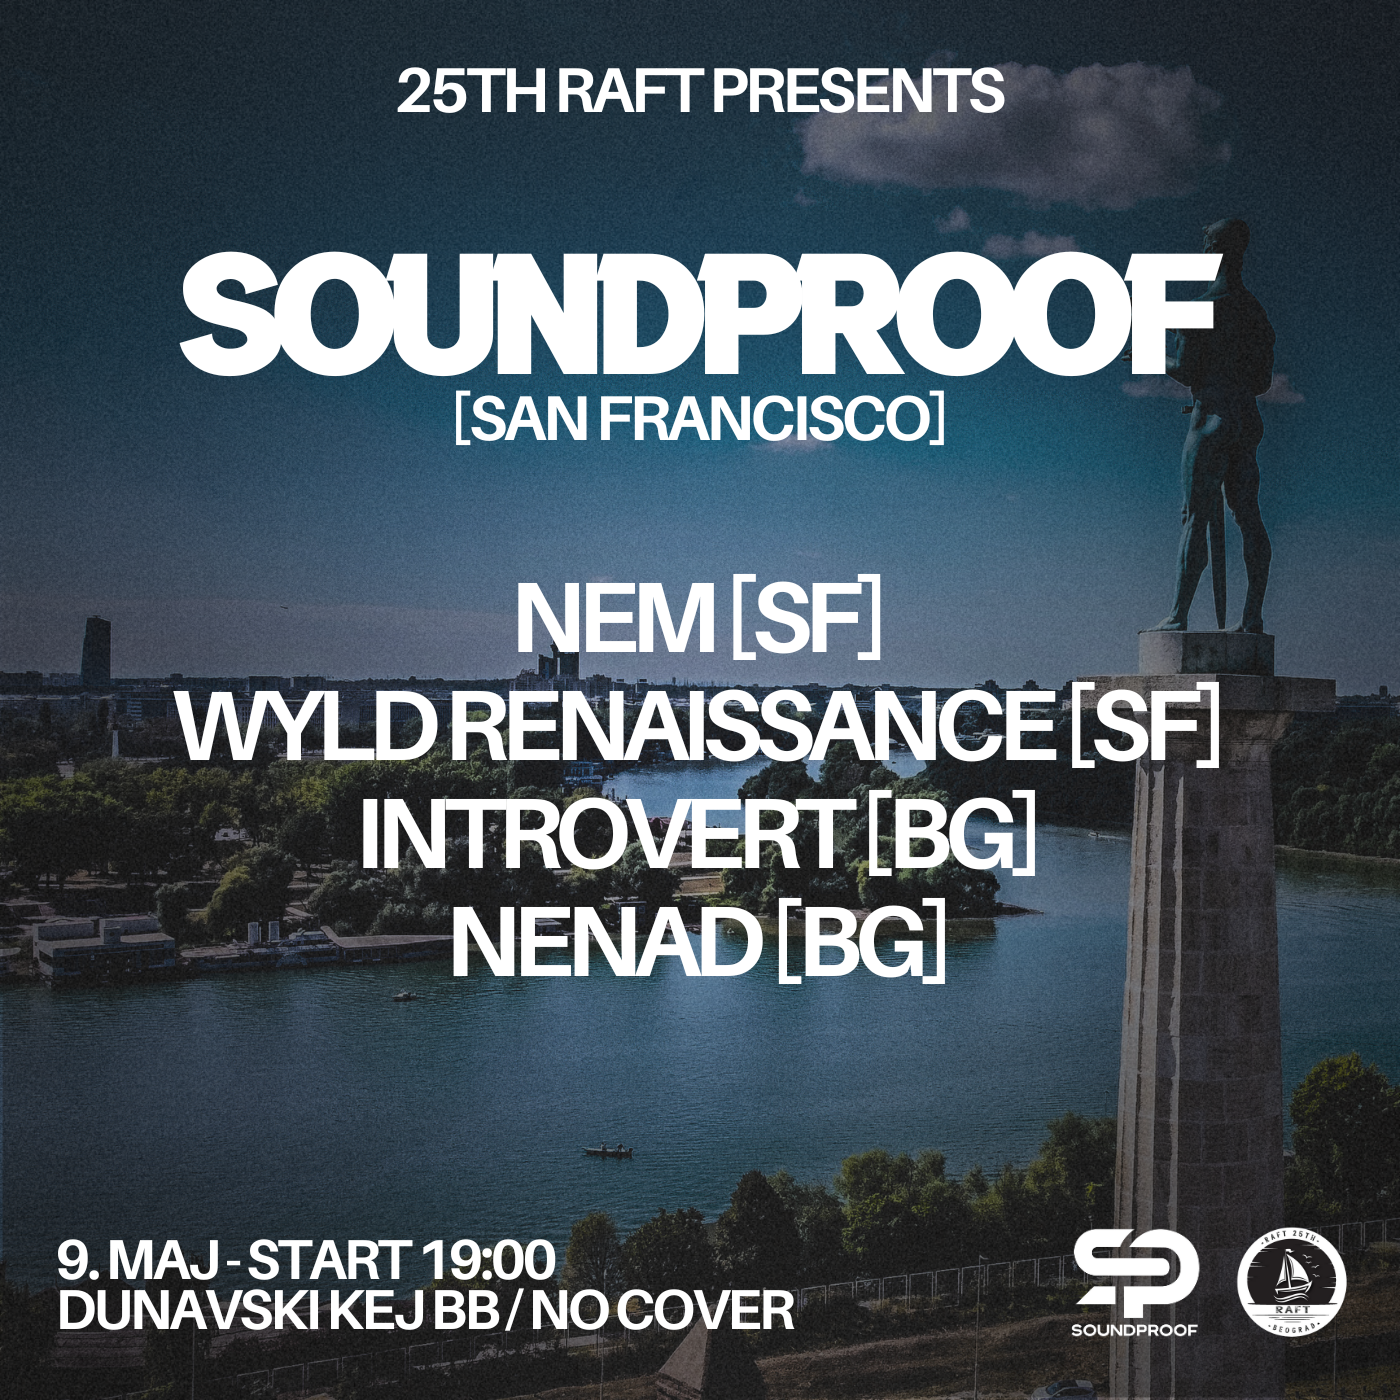 Raft 25th presents: Soundproof (San Francisco) - フライヤー表